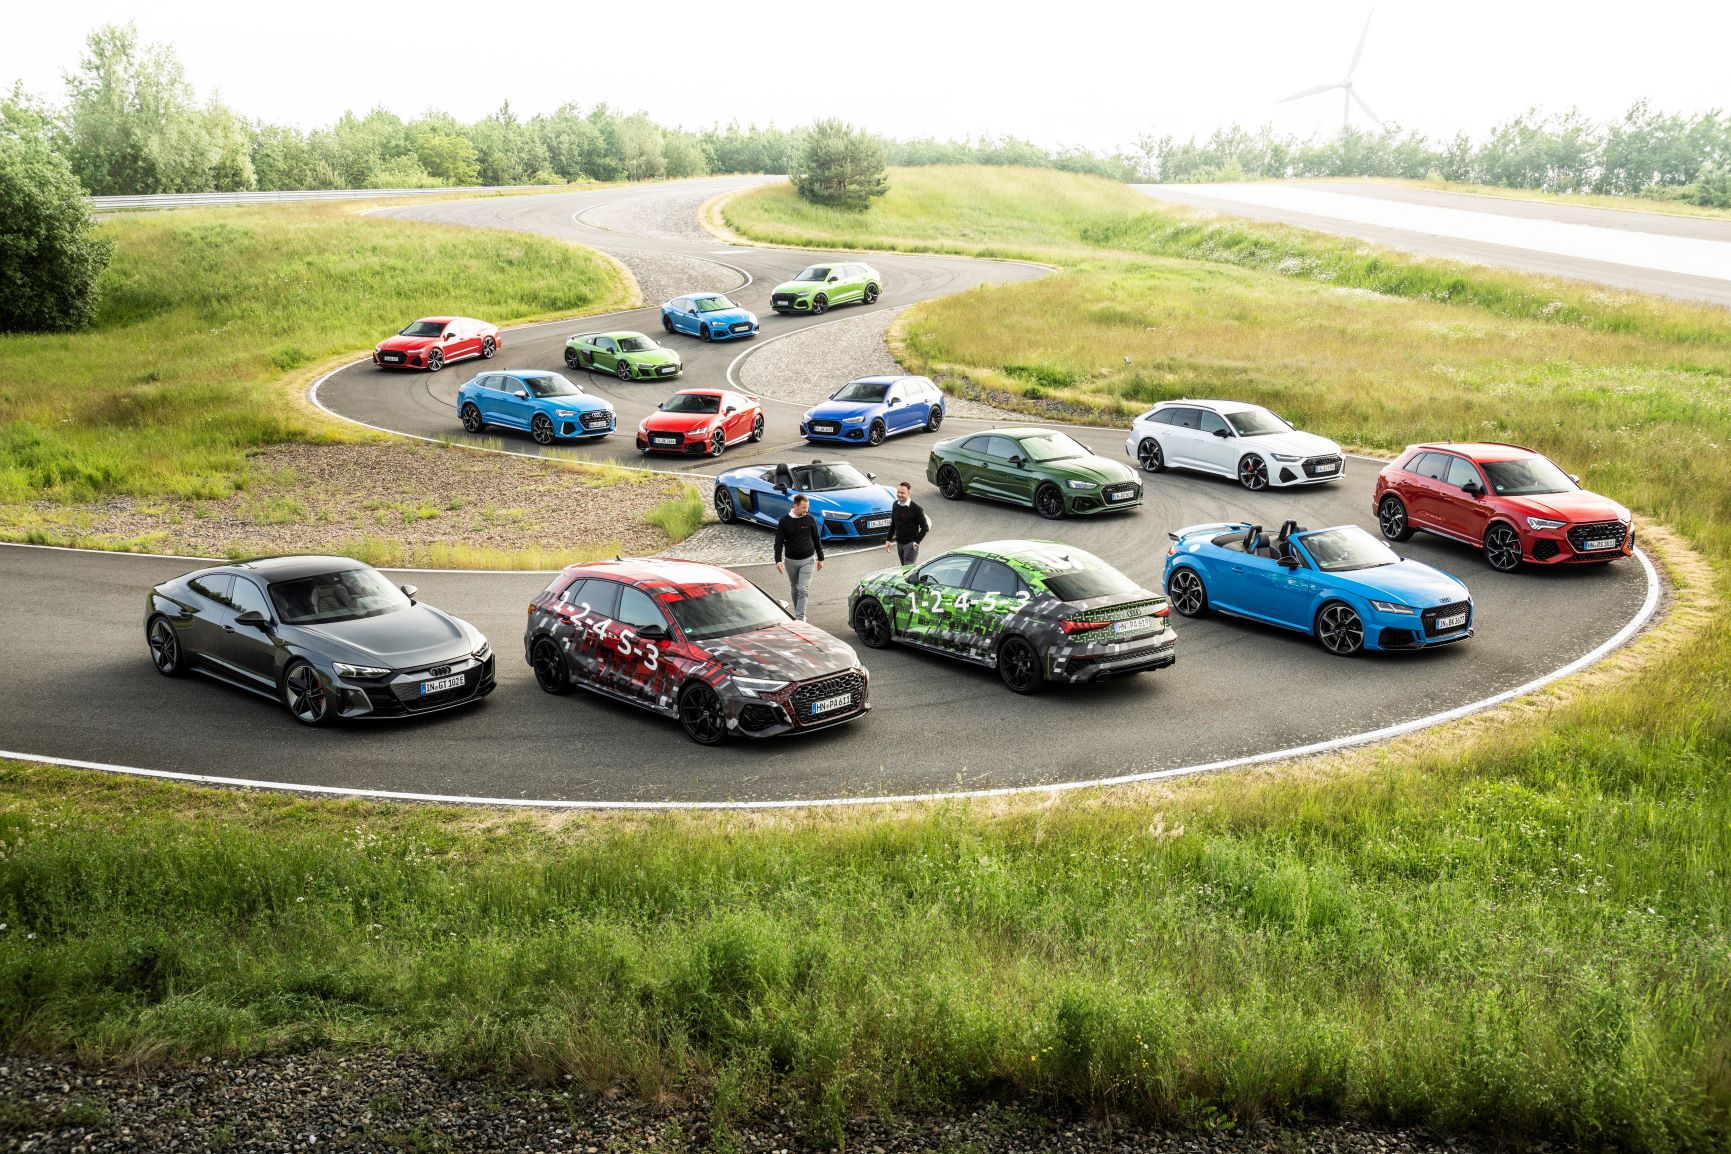 Audi's RS range of cars